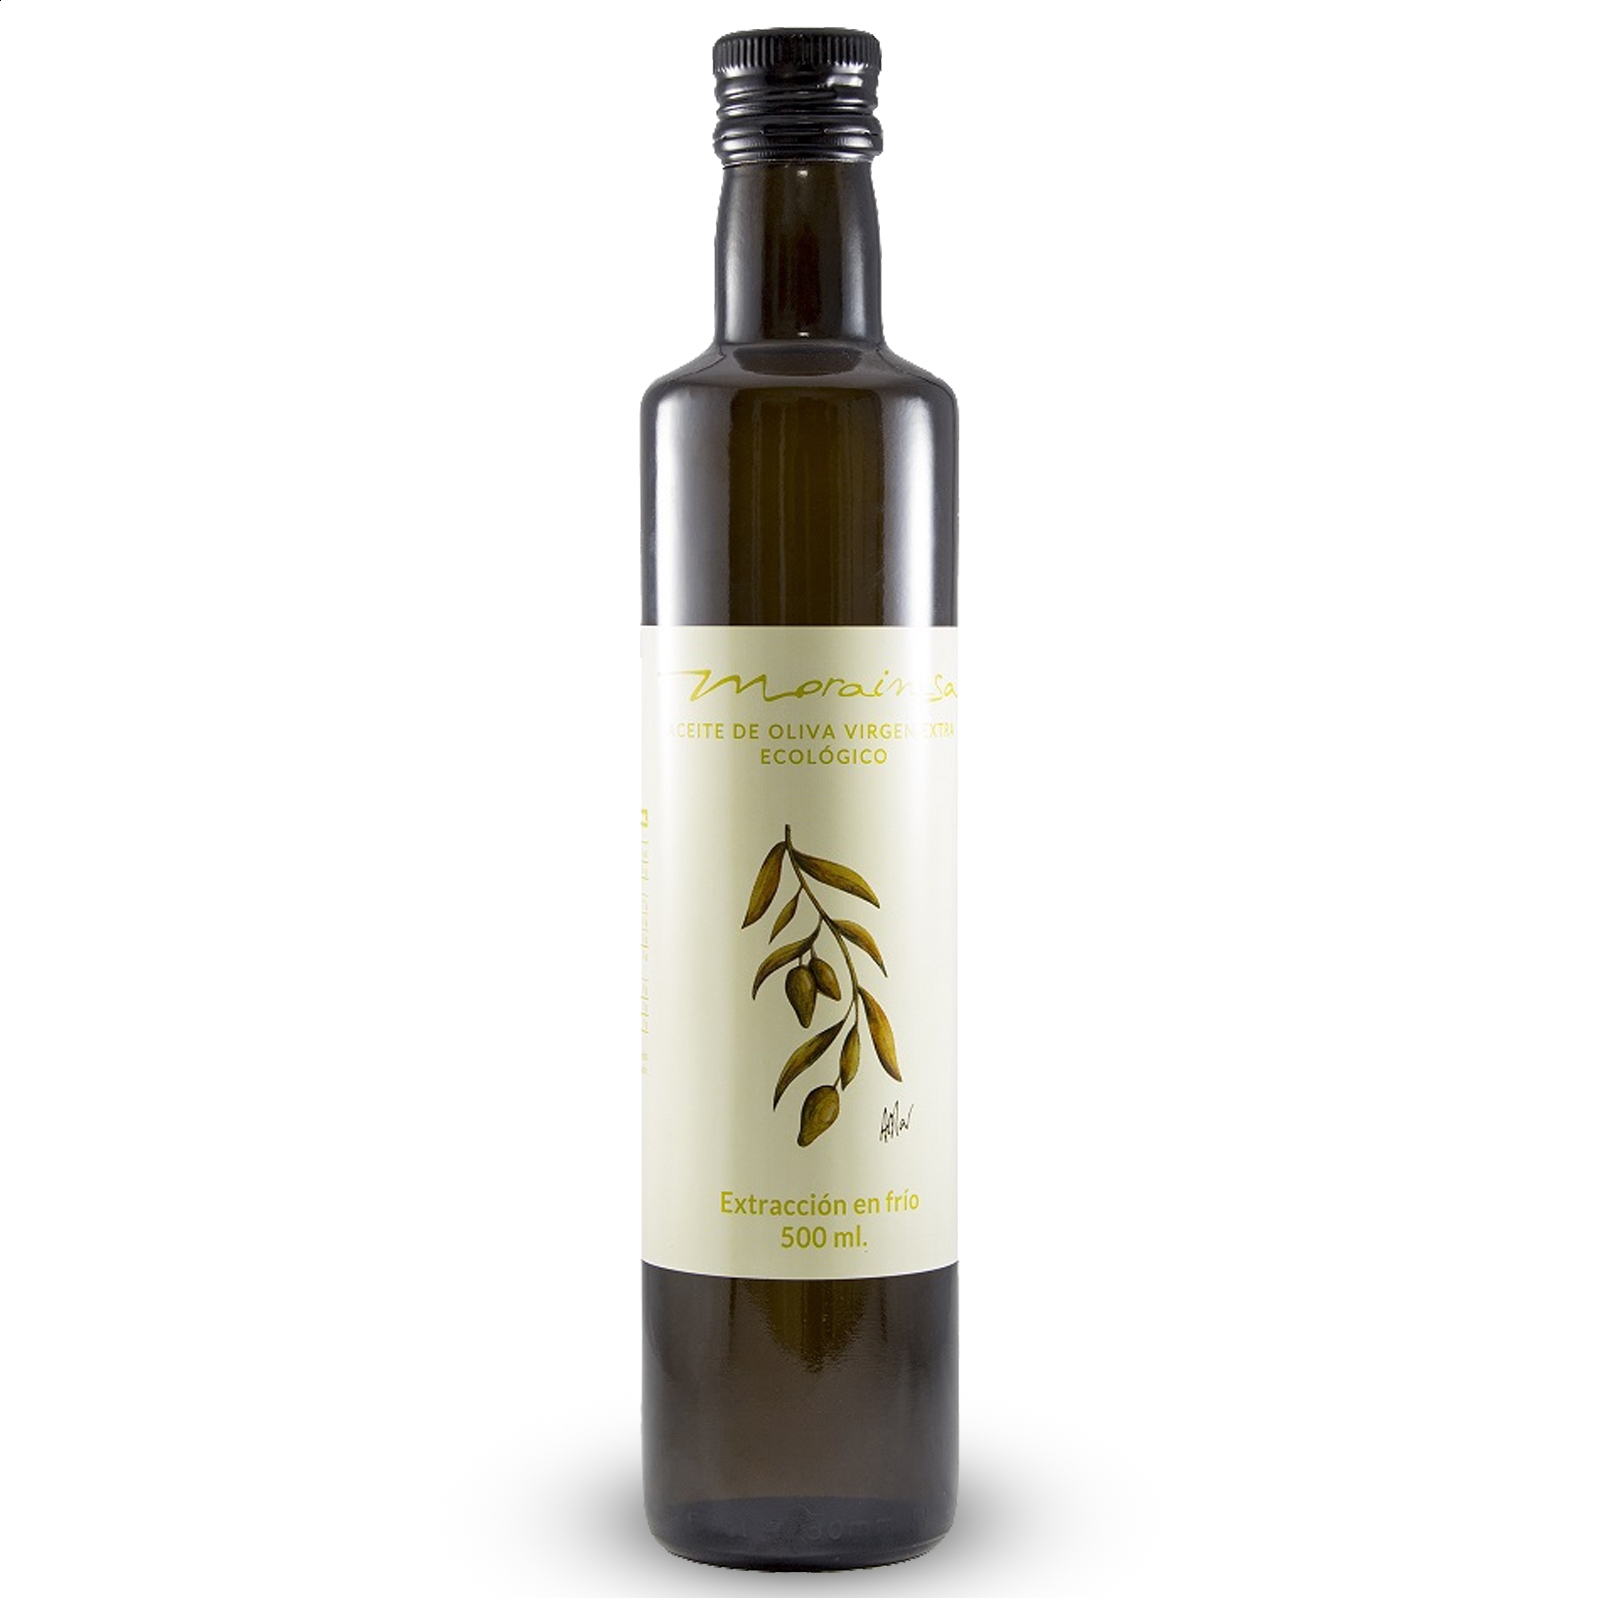 Morainsa - Aceite de oliva extra virgen ecológico 500ml, 6uds